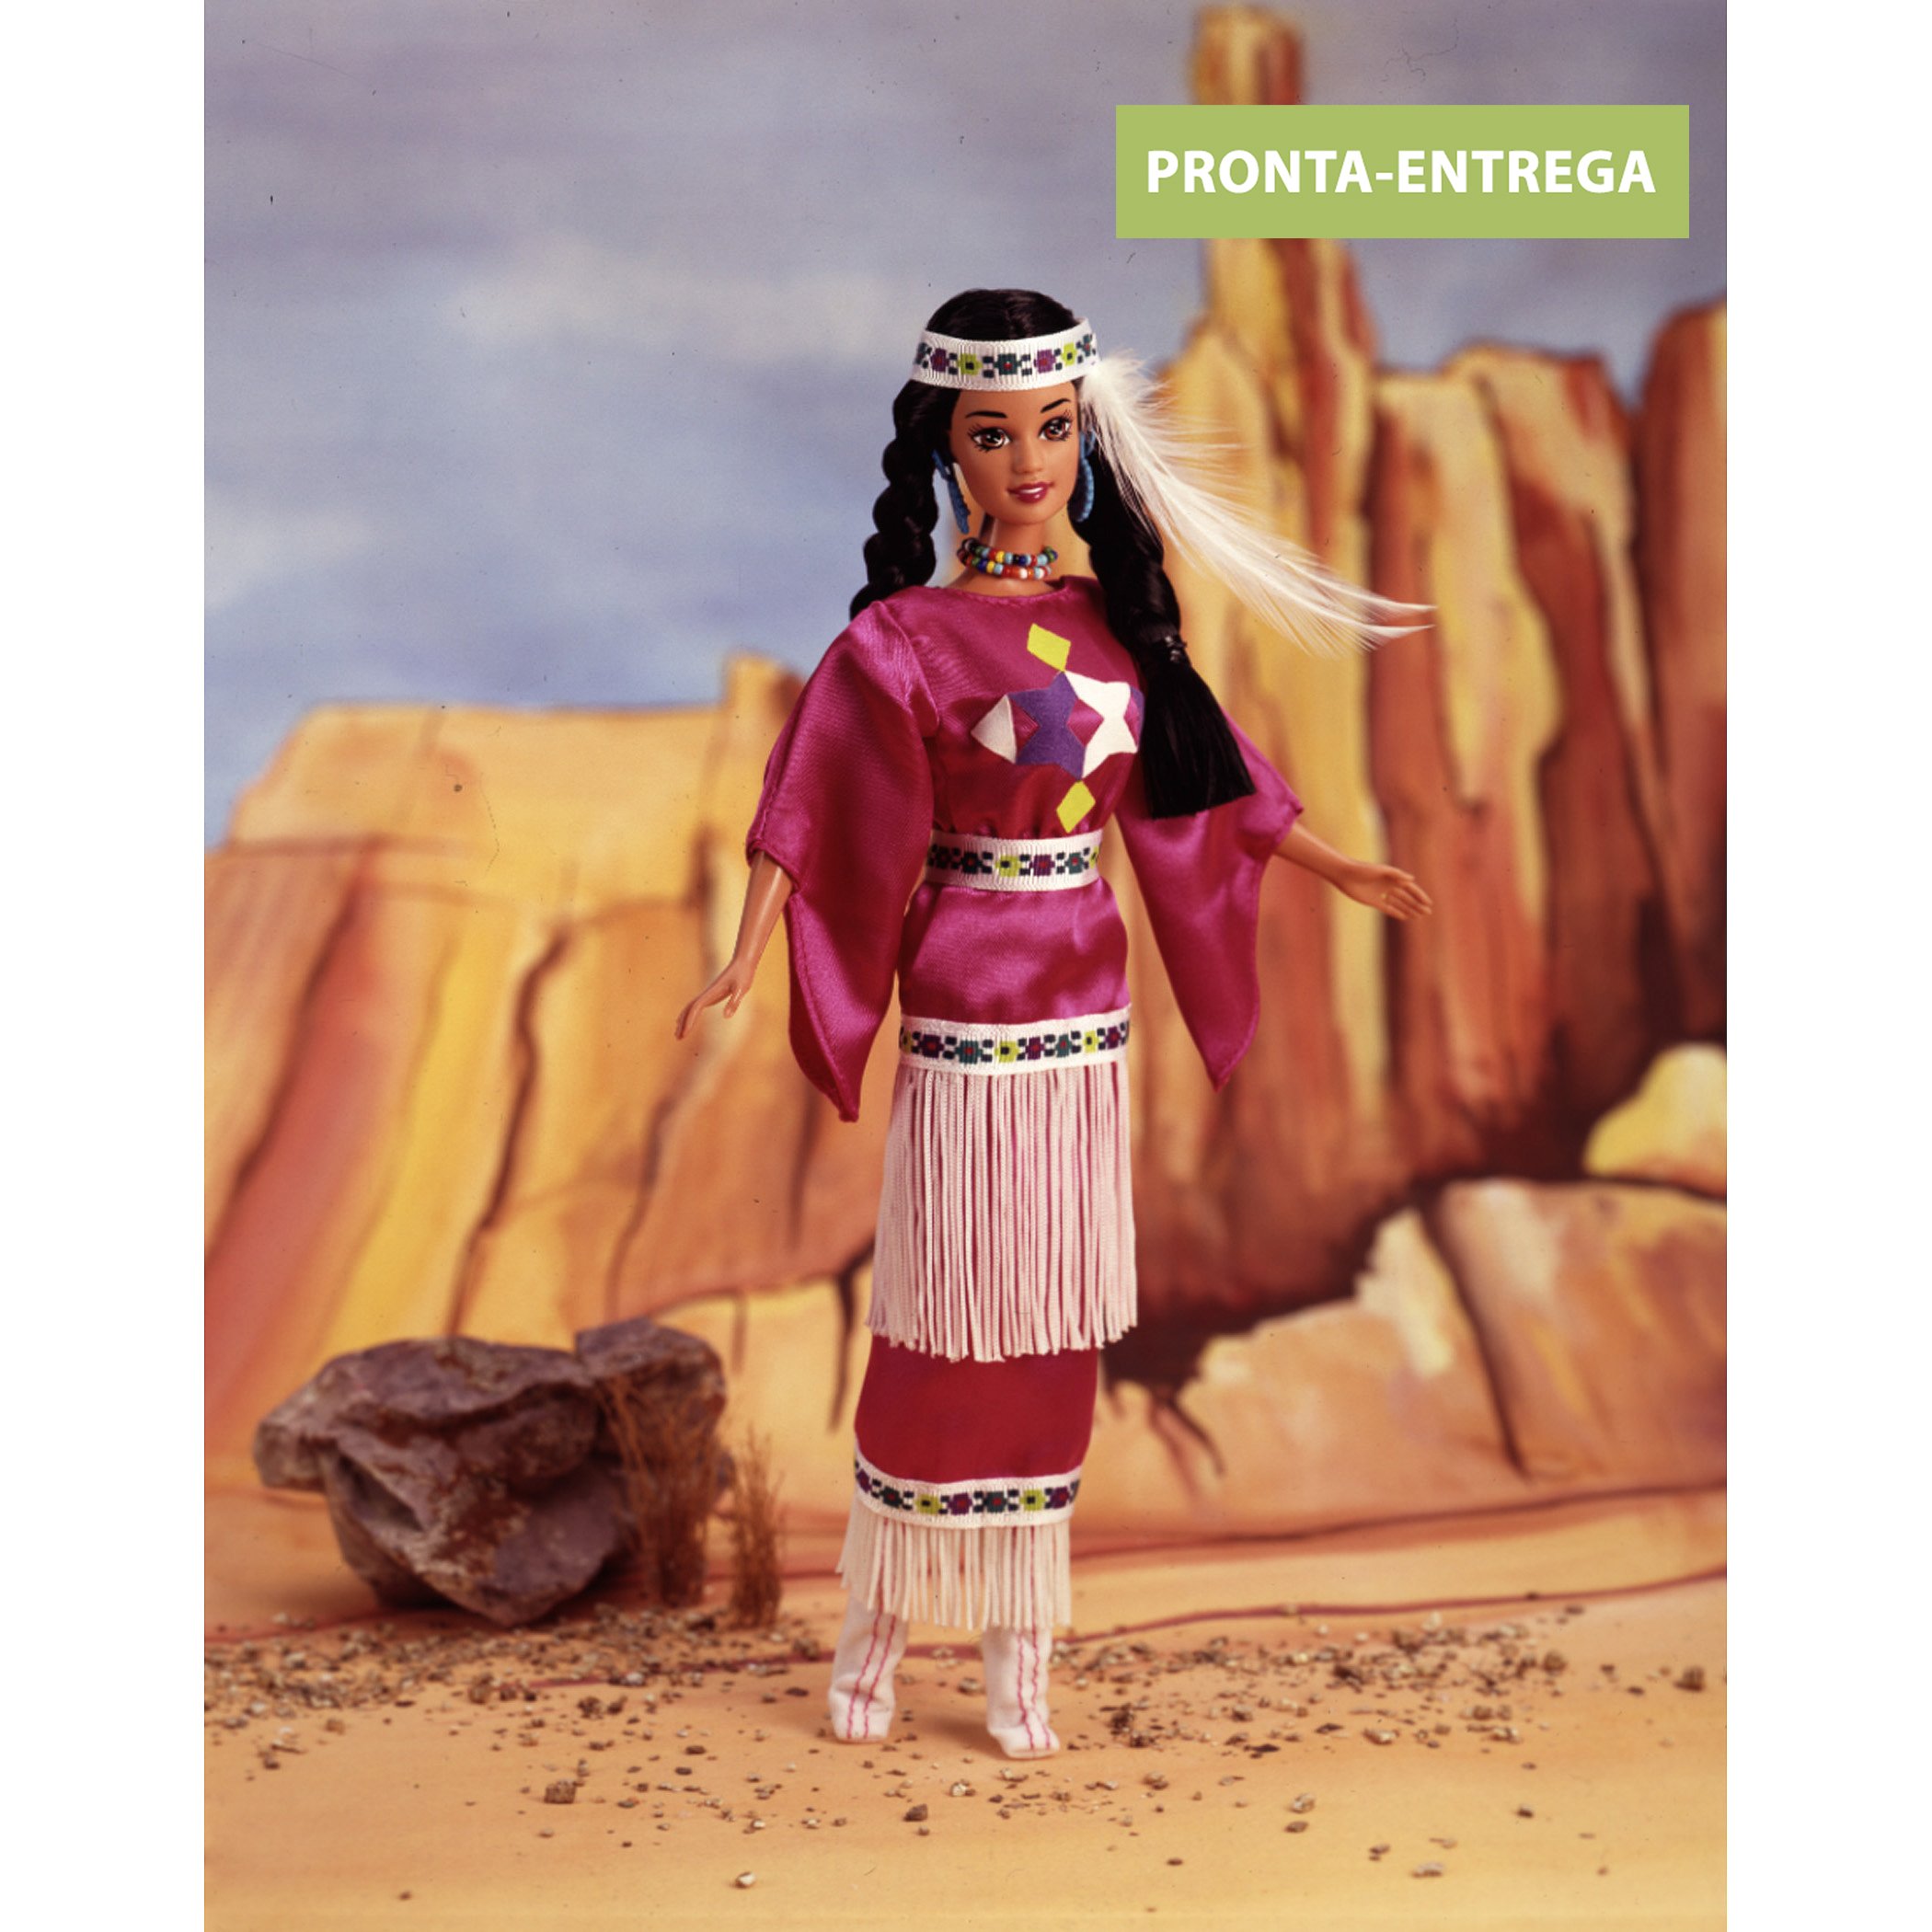 Boneca Barbie Collector DOTW Native American Roupa Rosa (A) - Mattel